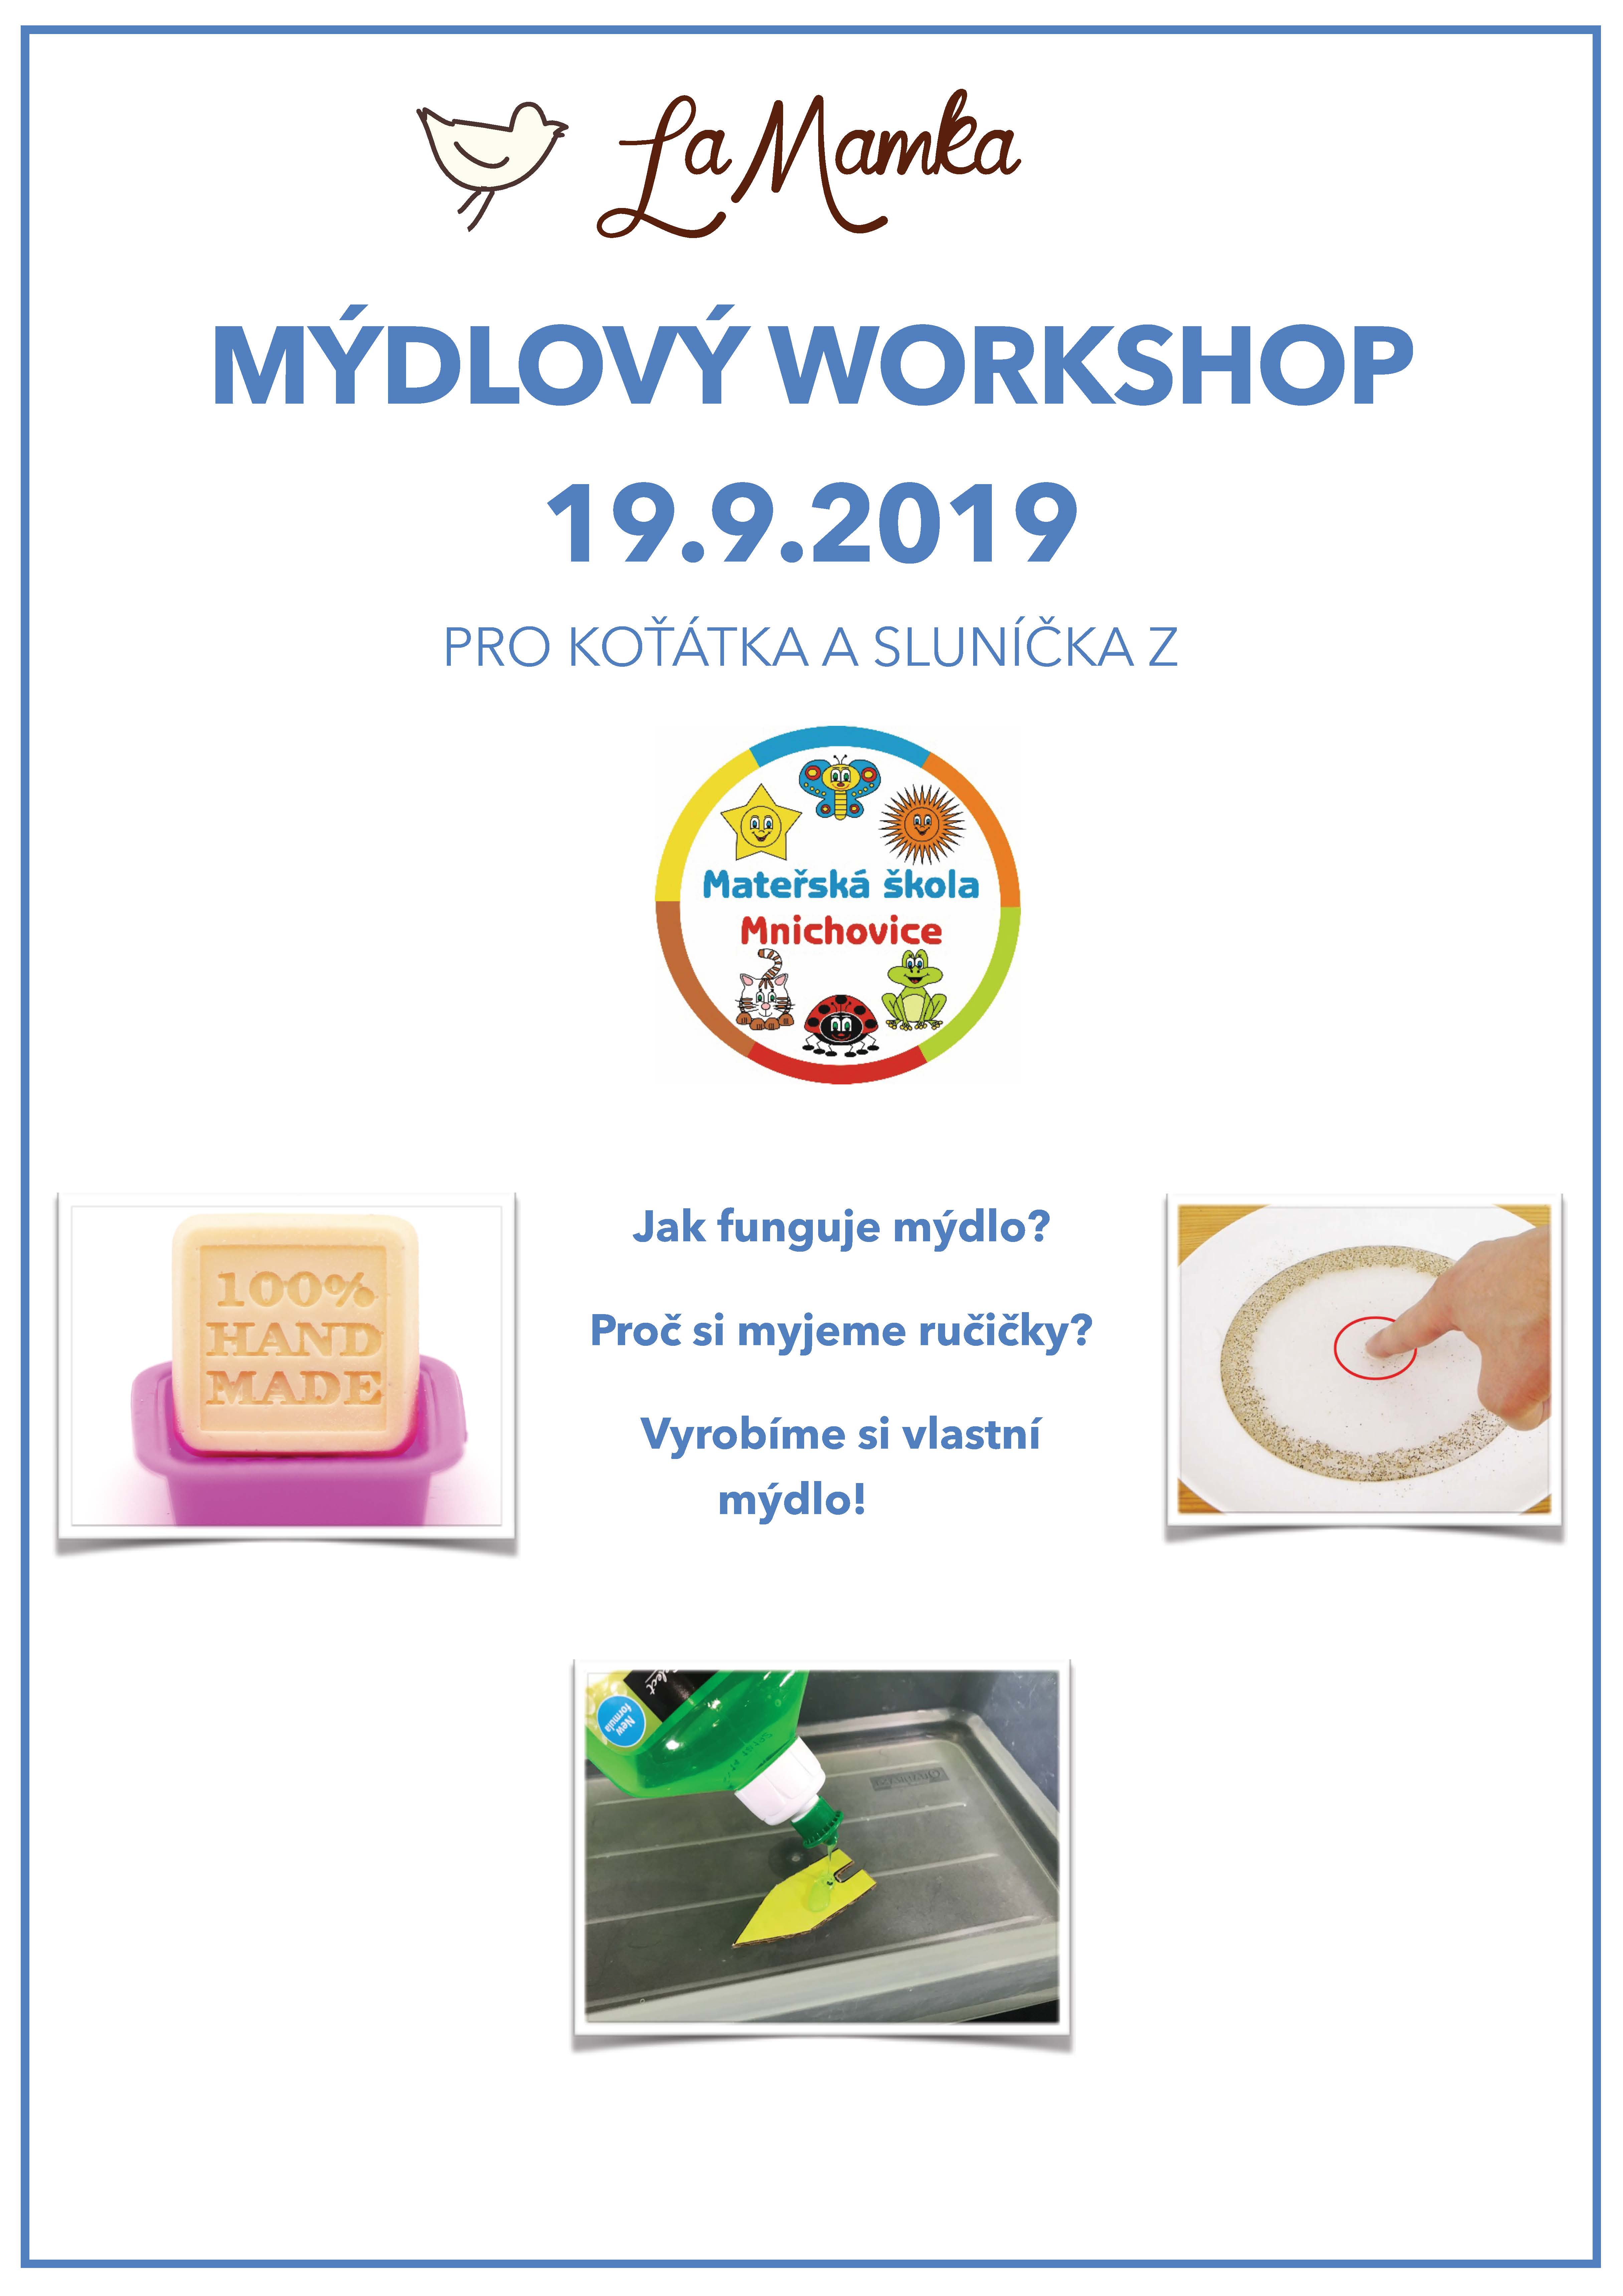 Mydlovy workshop